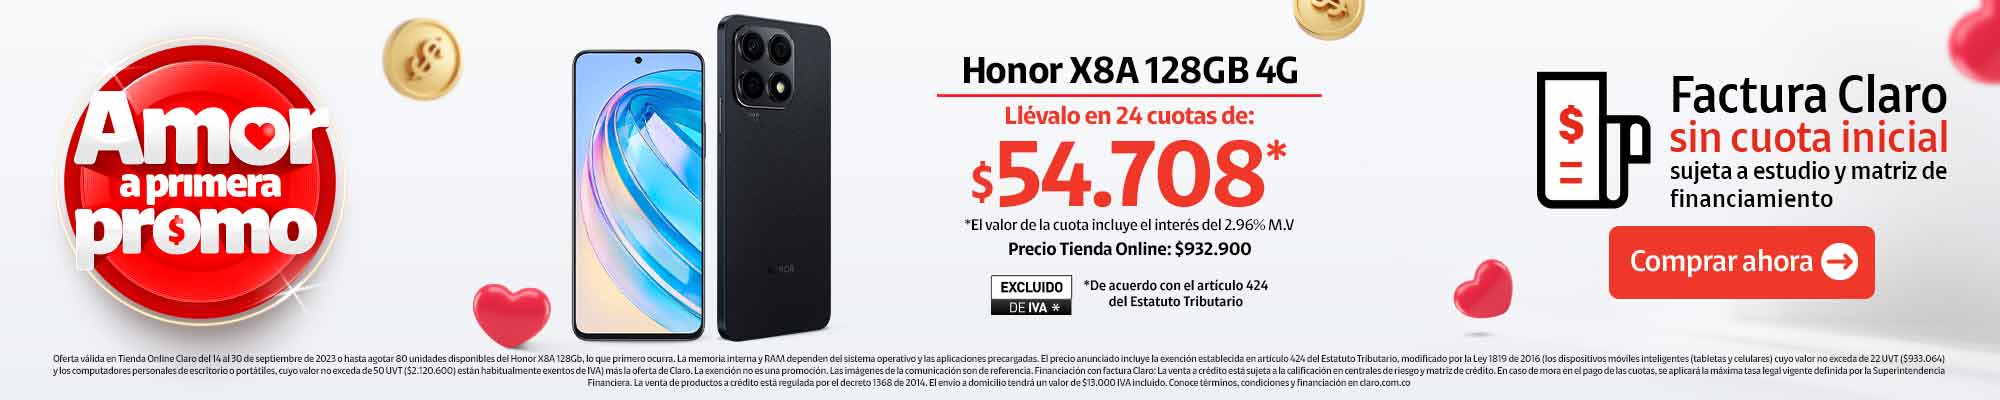 Honor X8A 128GB